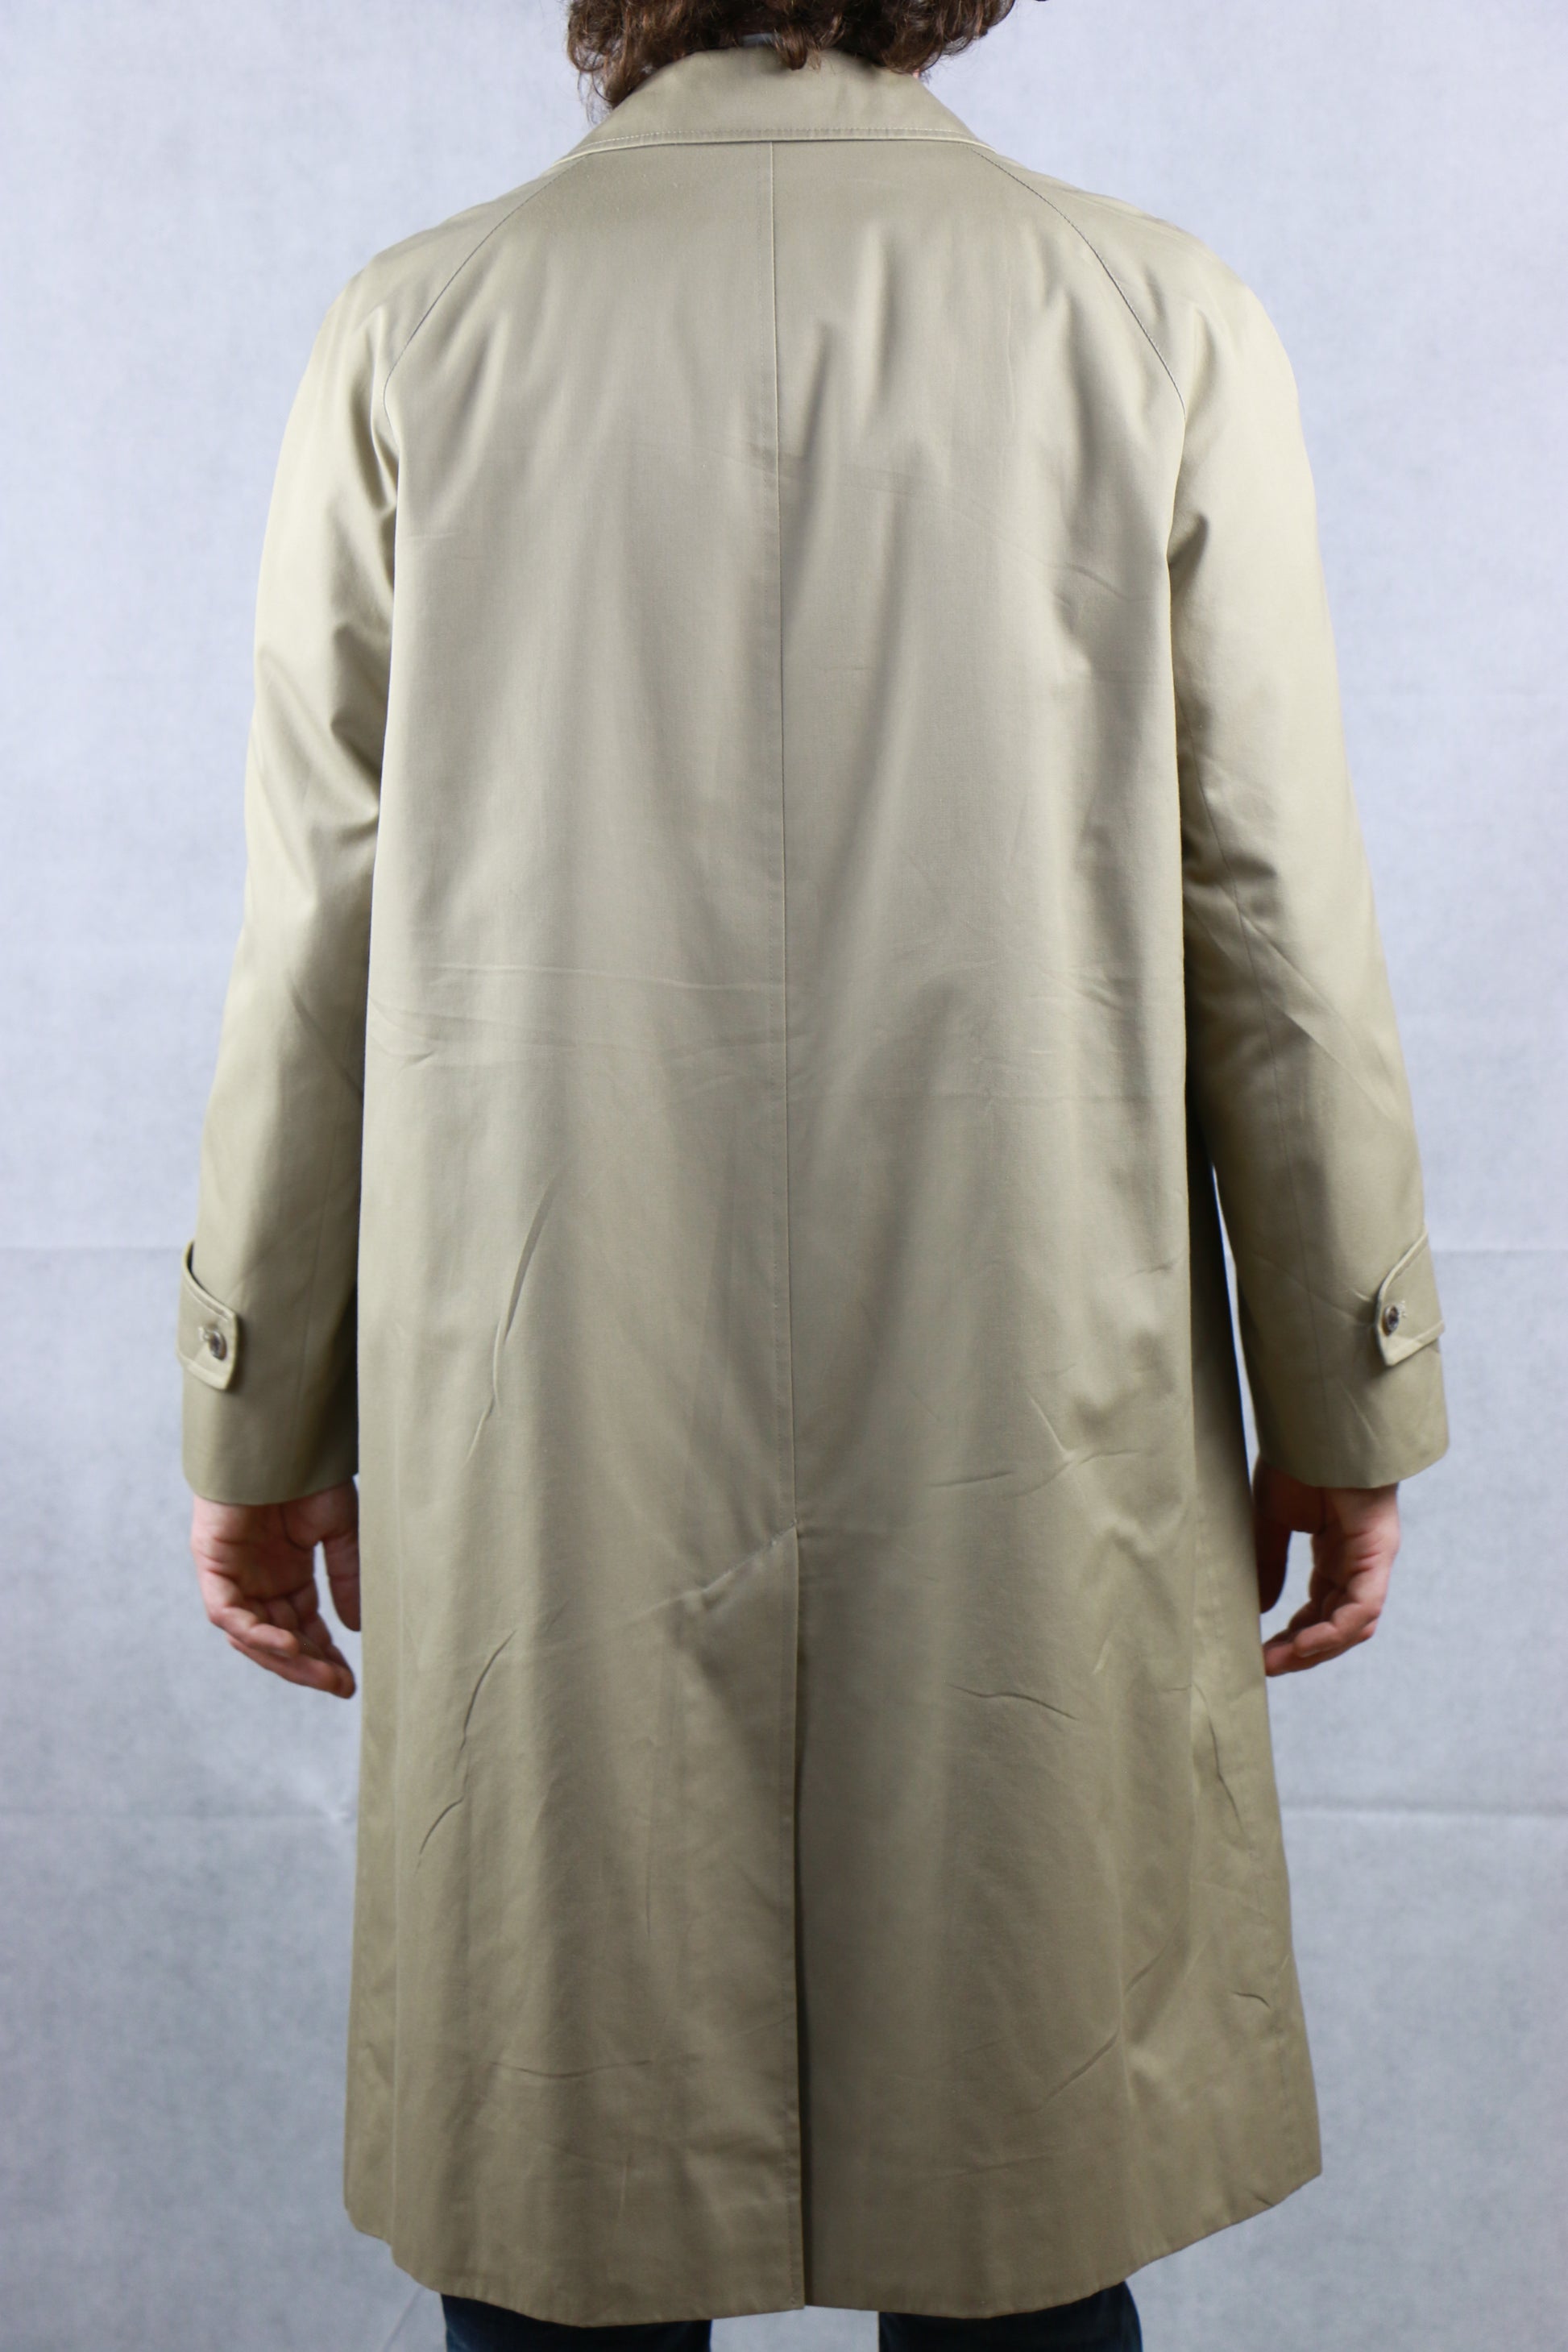 Aquascutum Trench Coat in Beige - vintage clothing clochard92.com